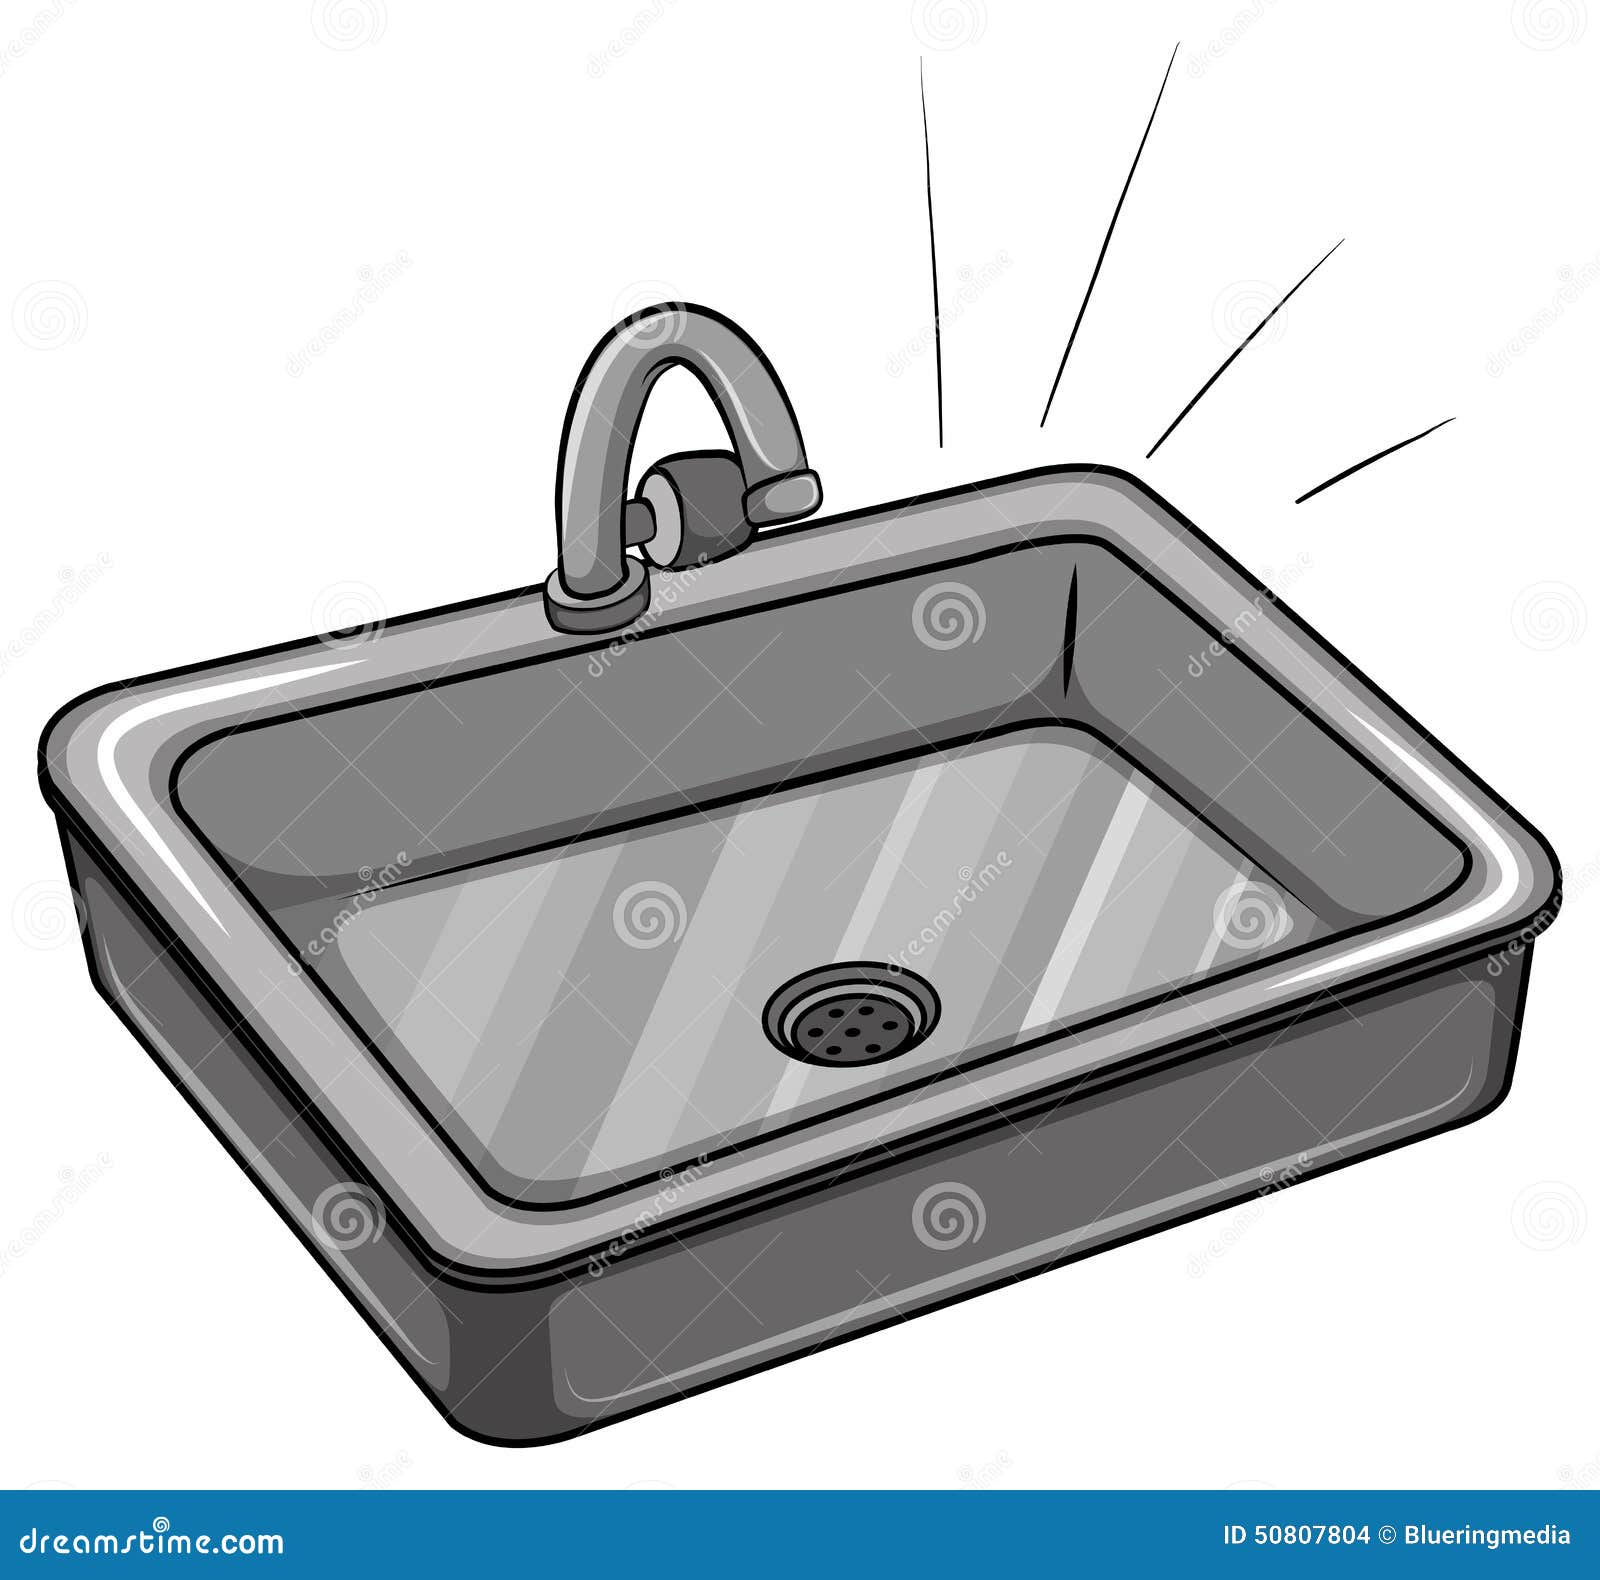 clipart of kitchen sink - photo #12